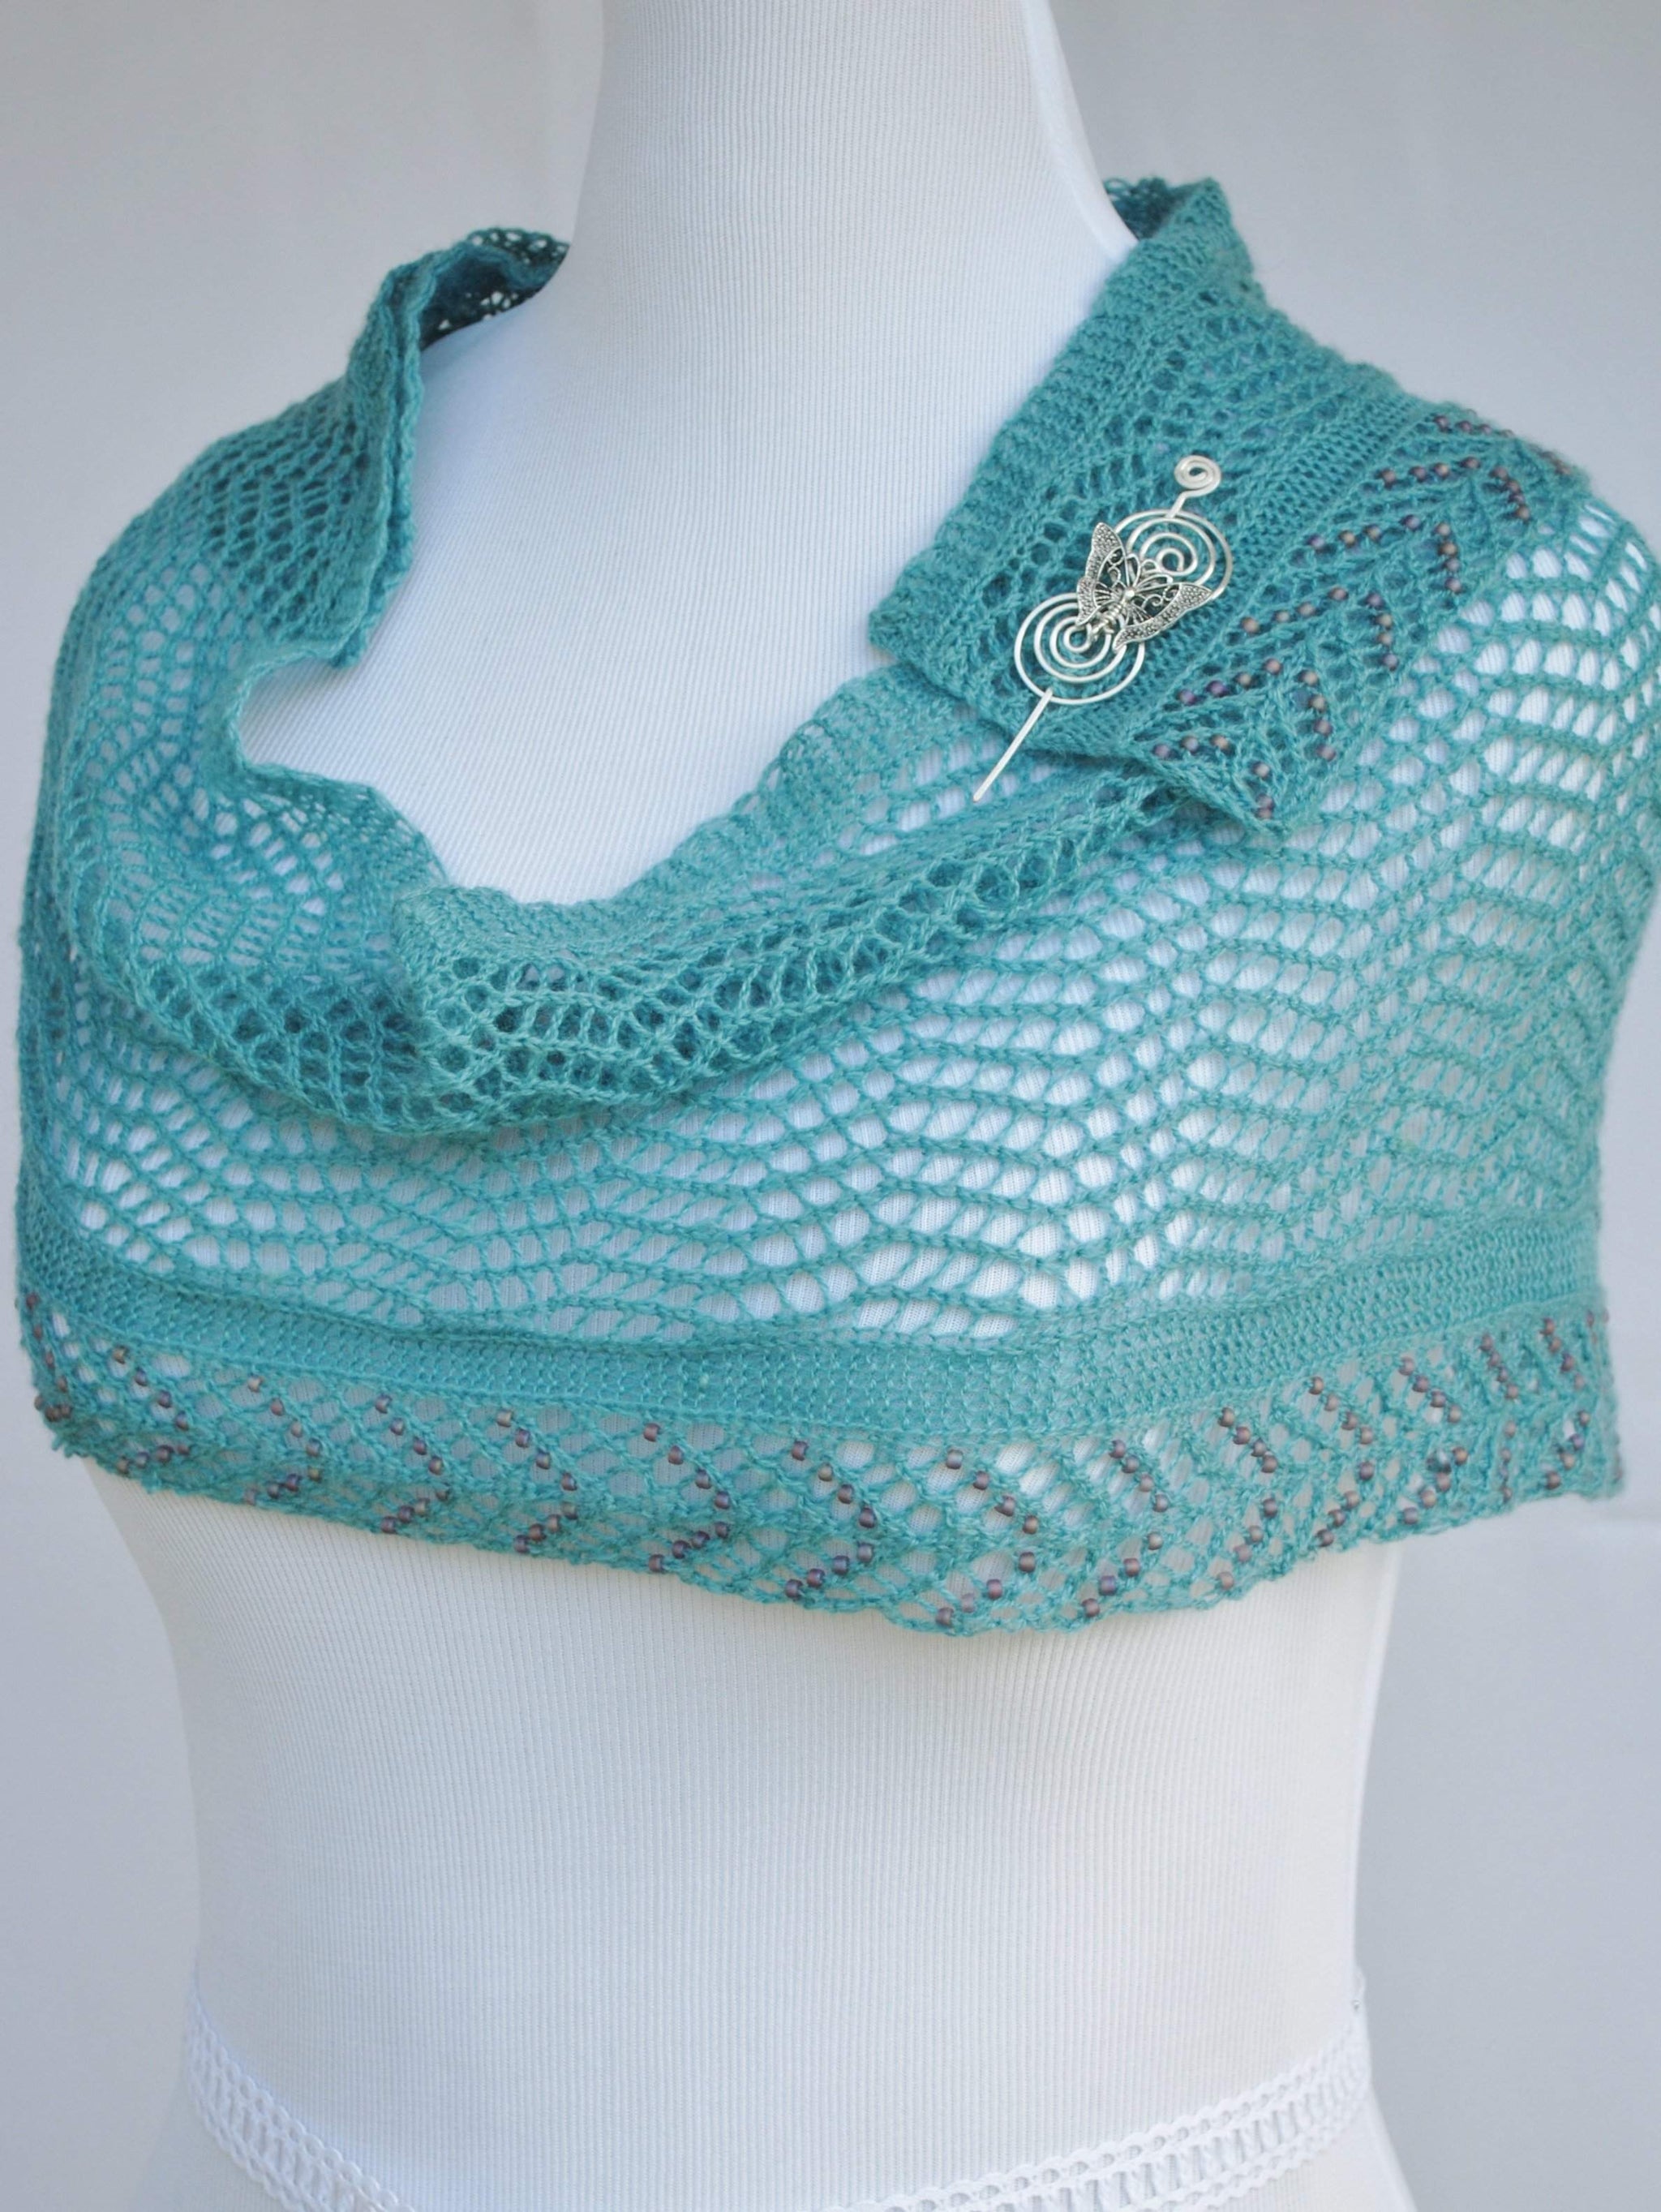 Beadazzled Beaded Lace Shawl Knitting Pattern Pdf Download